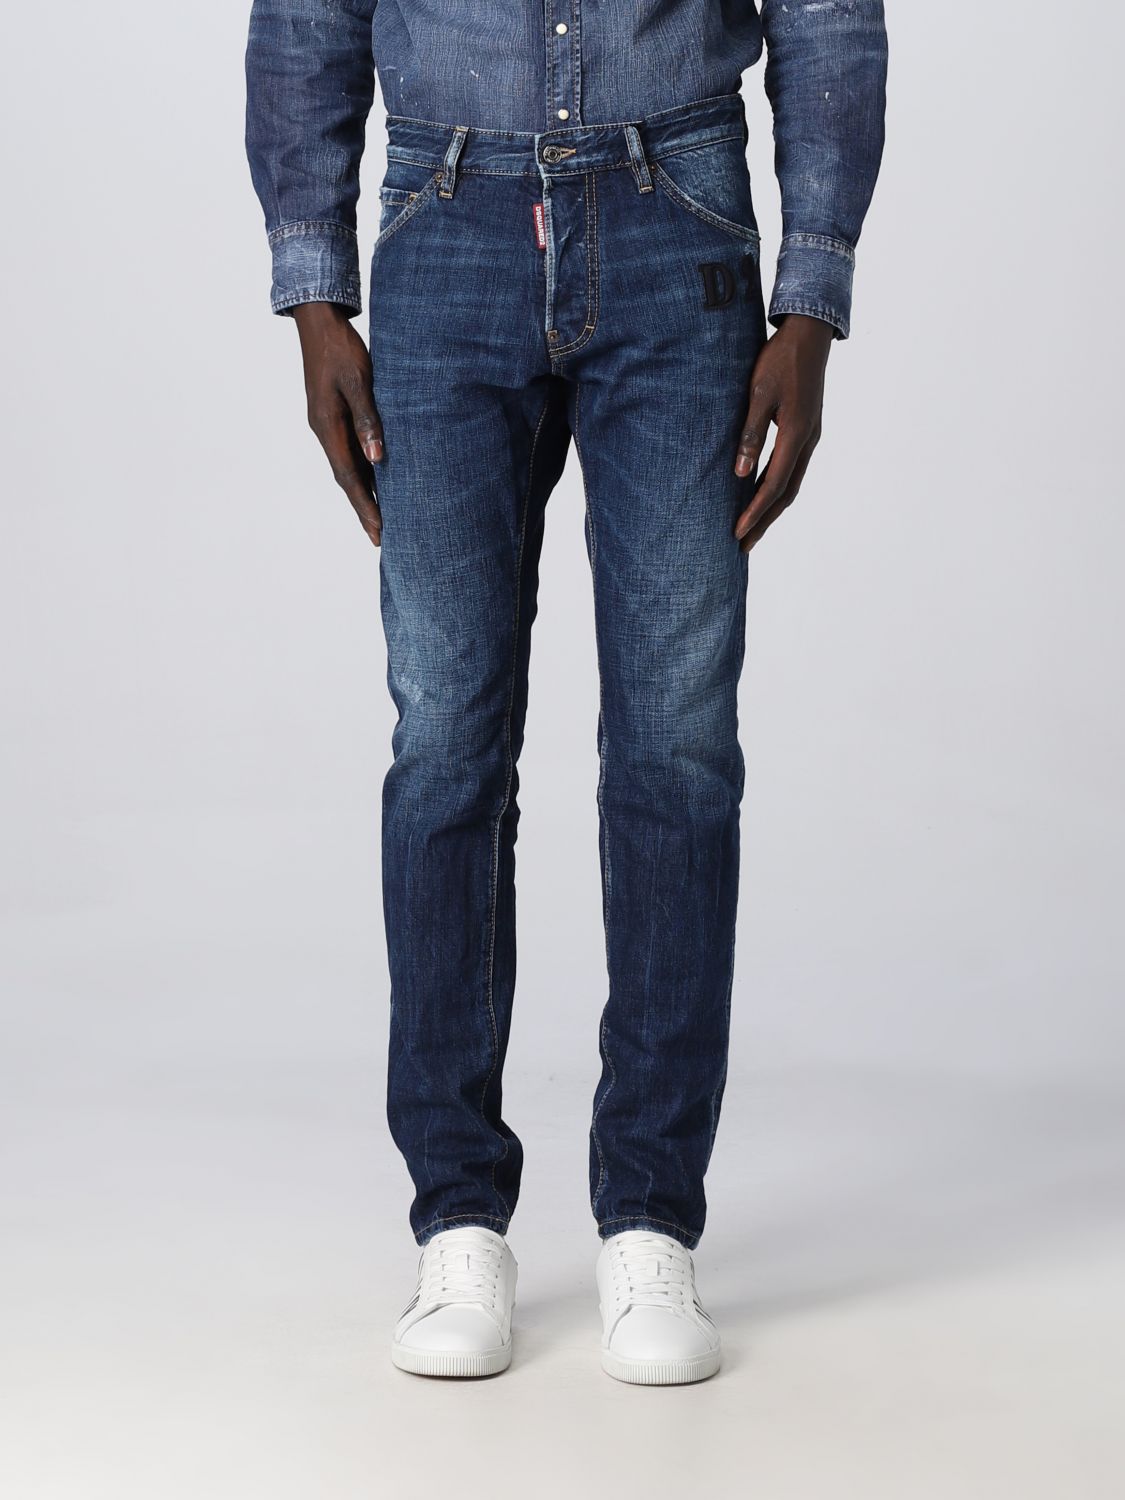 Lokken Terughoudendheid verticaal DSQUARED2: jeans for man - Denim | Dsquared2 jeans S74LB1292S30309 online  on GIGLIO.COM